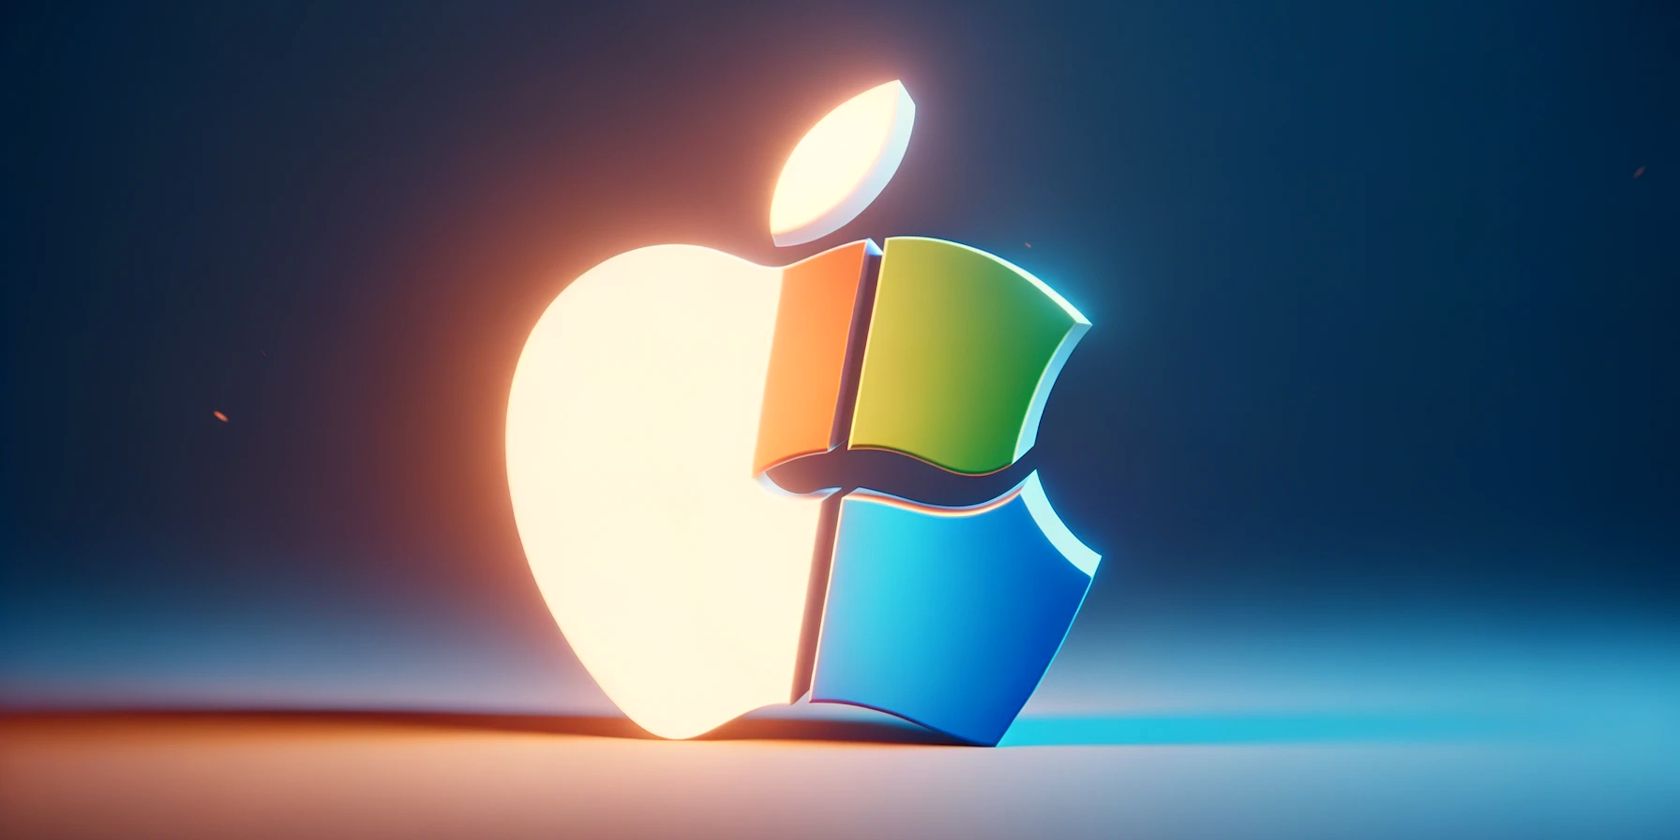 apple logo and windows logo combined into a single logo